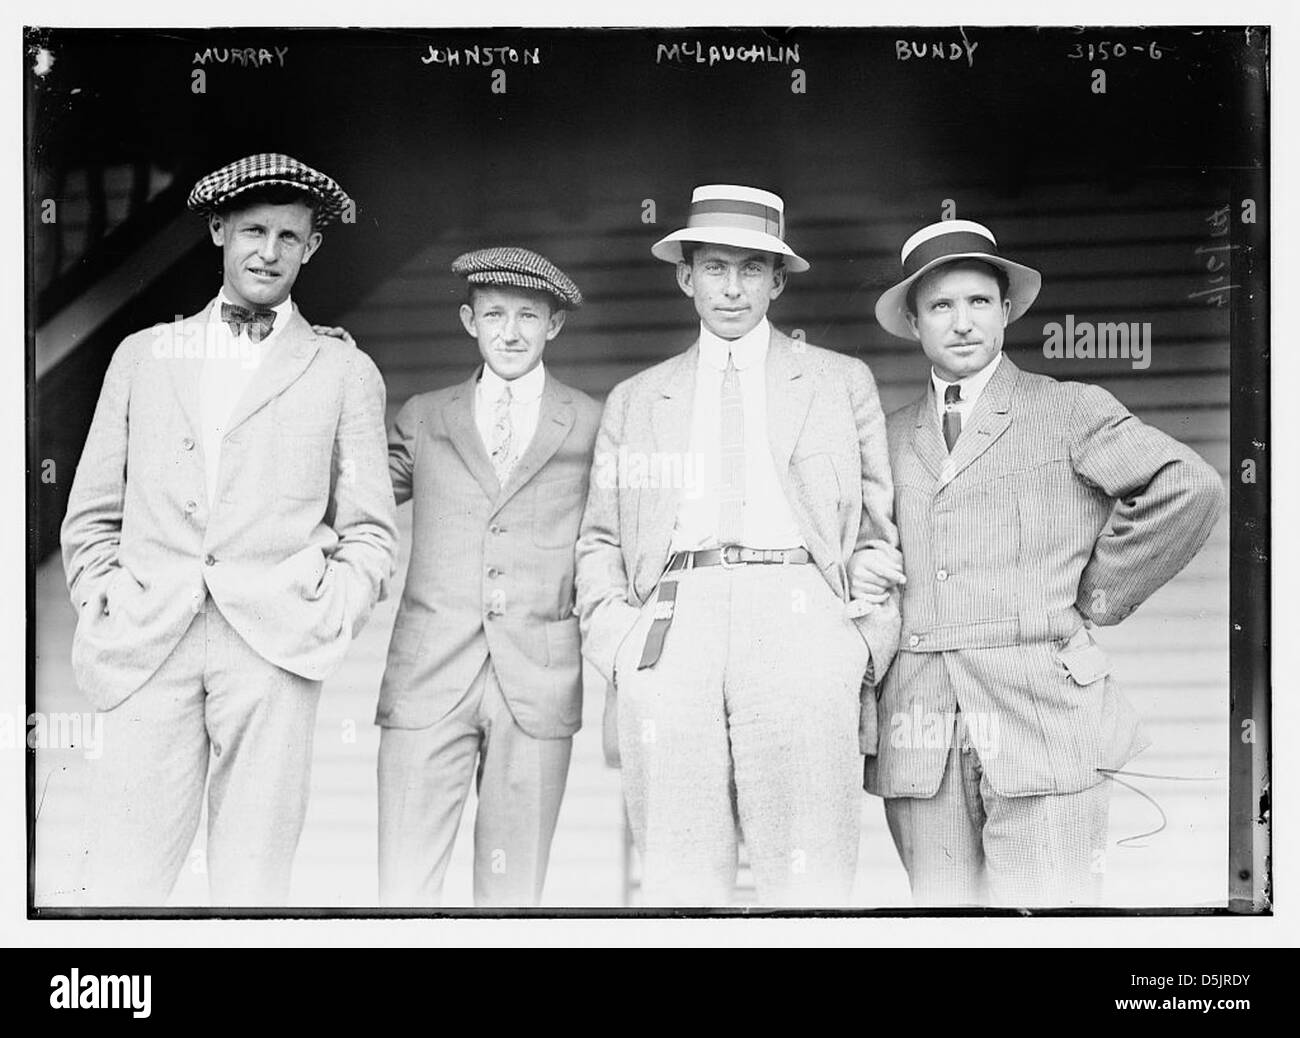 Murray, Johnston, McLaughlin [d. h. McLoughlin] Bundy (LOC) Stockfoto